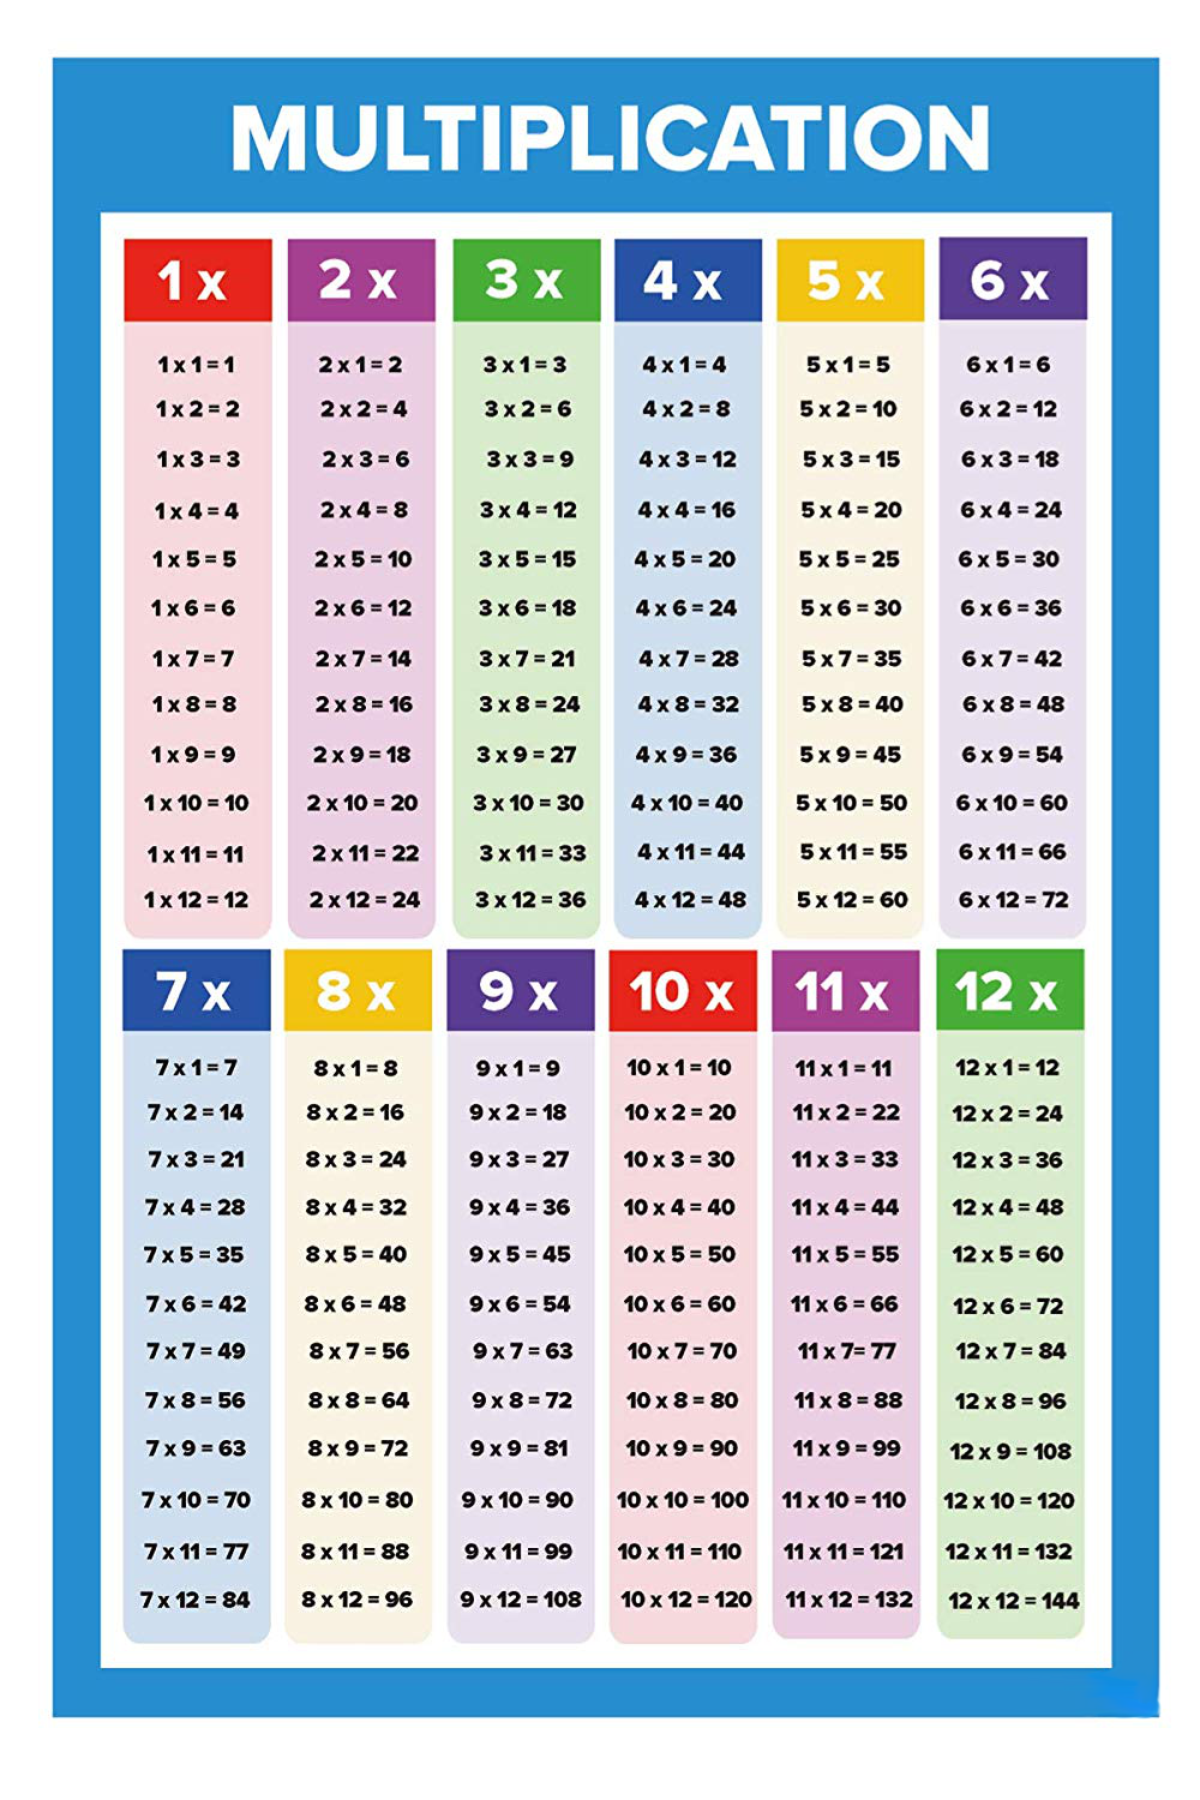 multiplication 8 chart